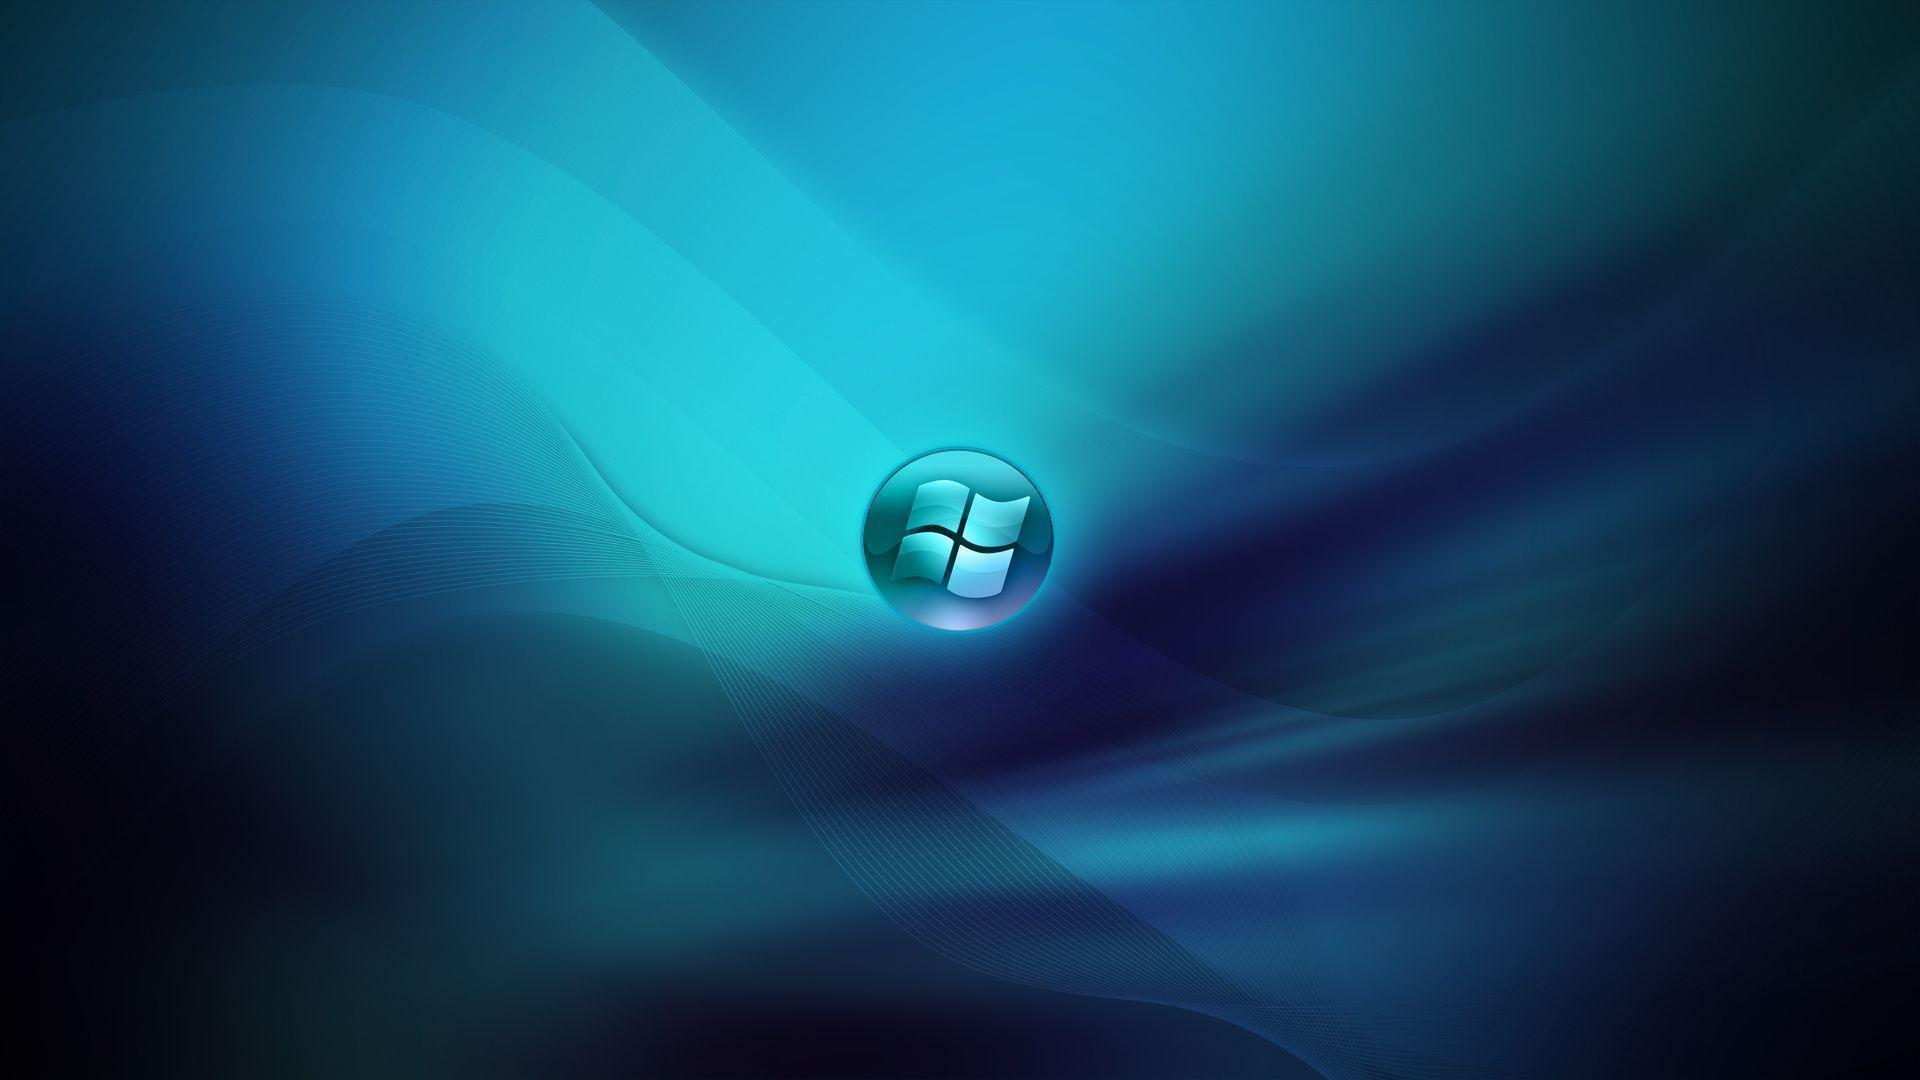 Wallpaper For > Windows 7 Wallpaper HD Blue